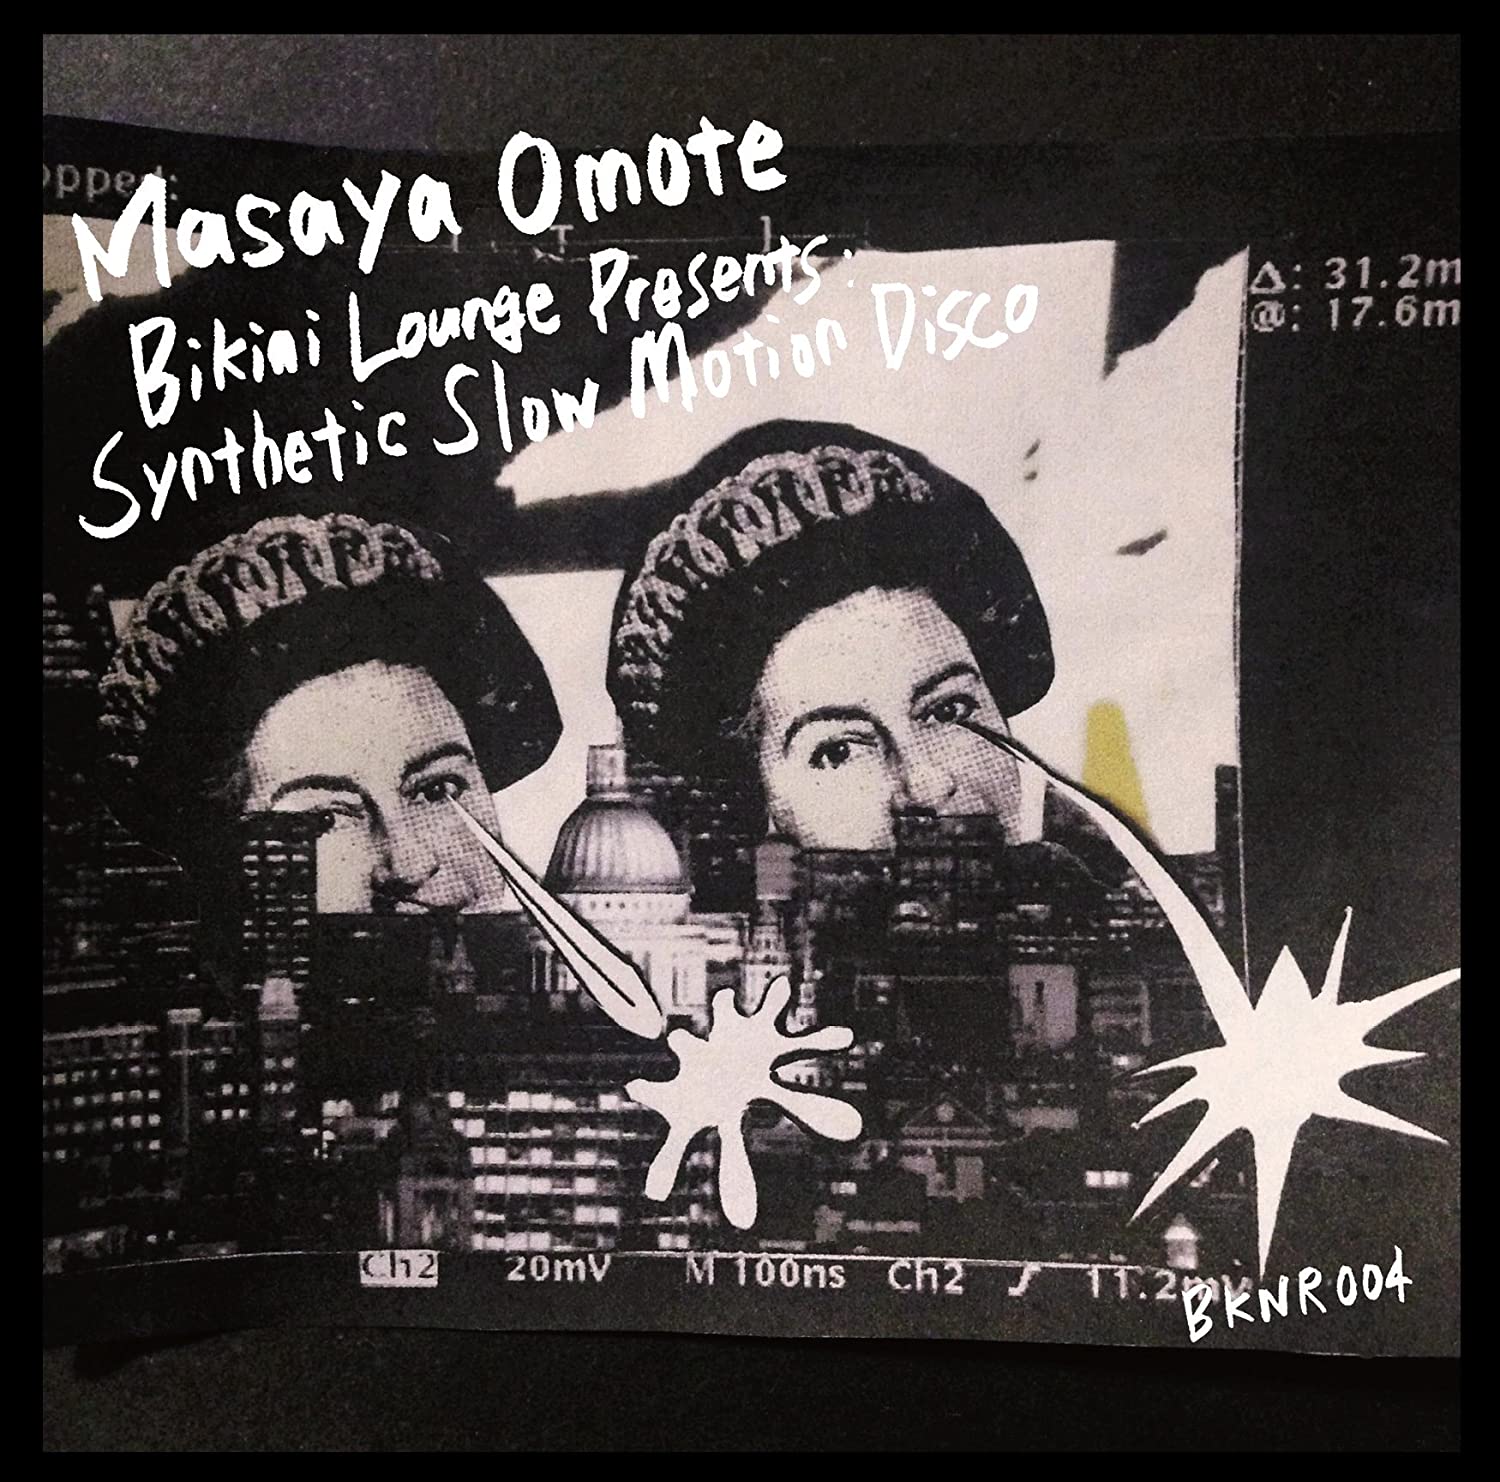 BIKINI LOUNGE presents: Synthetic Slow Motion Disco/masaya omote